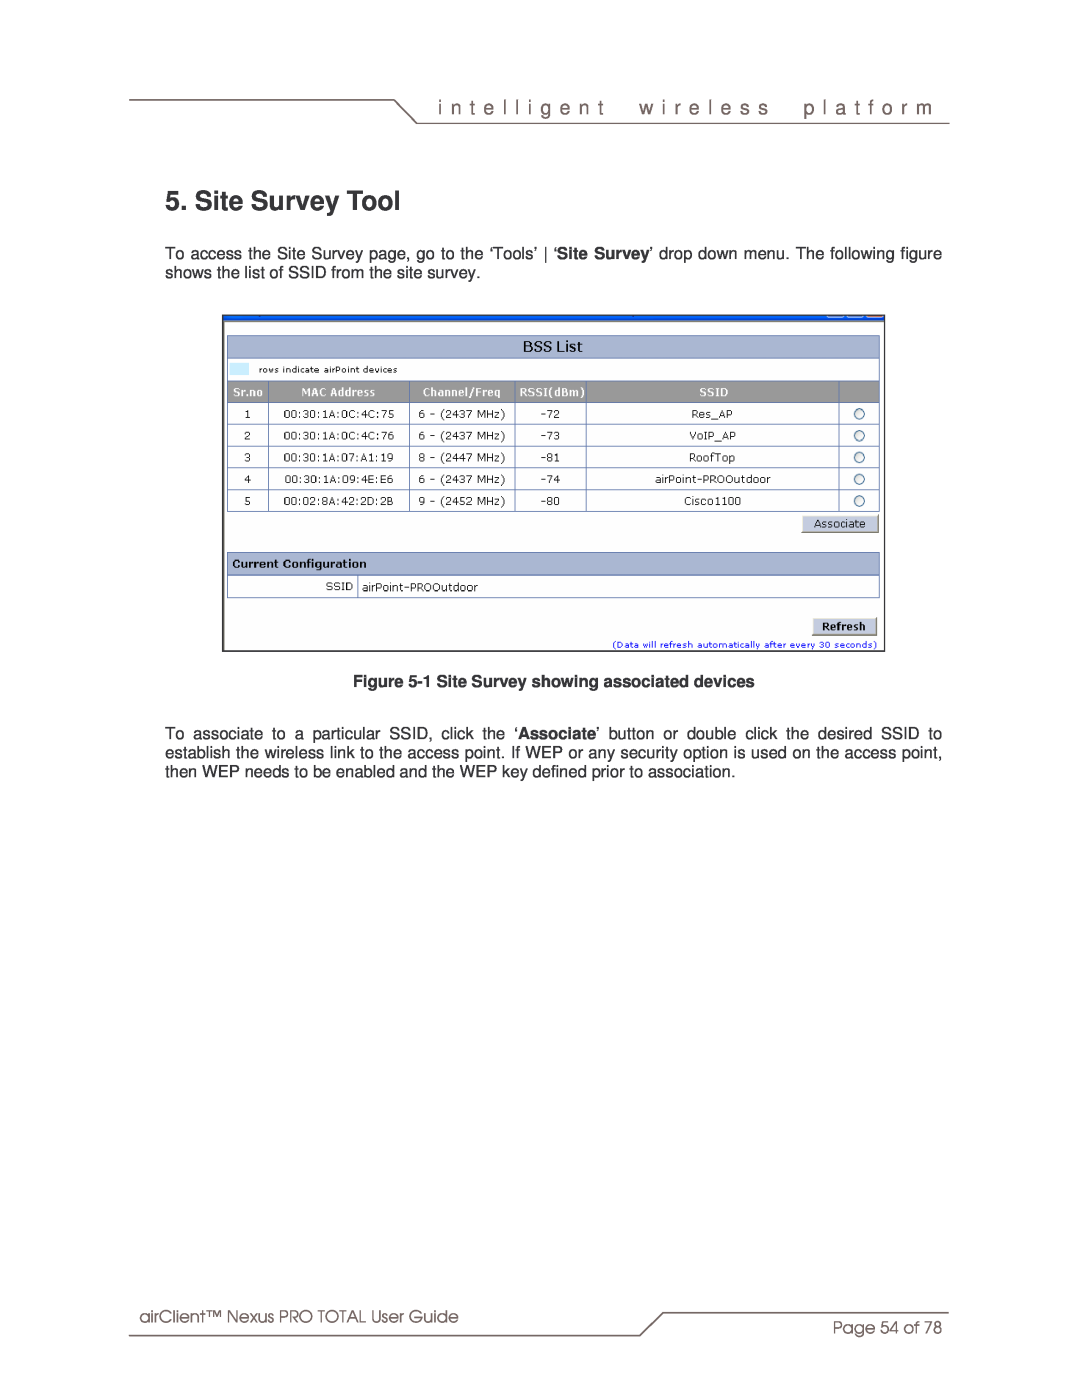 SmartBridges sB3412 manual Site Survey Tool, i n t e l l i g e n t, w i r e l e s s, p l a t f o r m, Page 54 of 